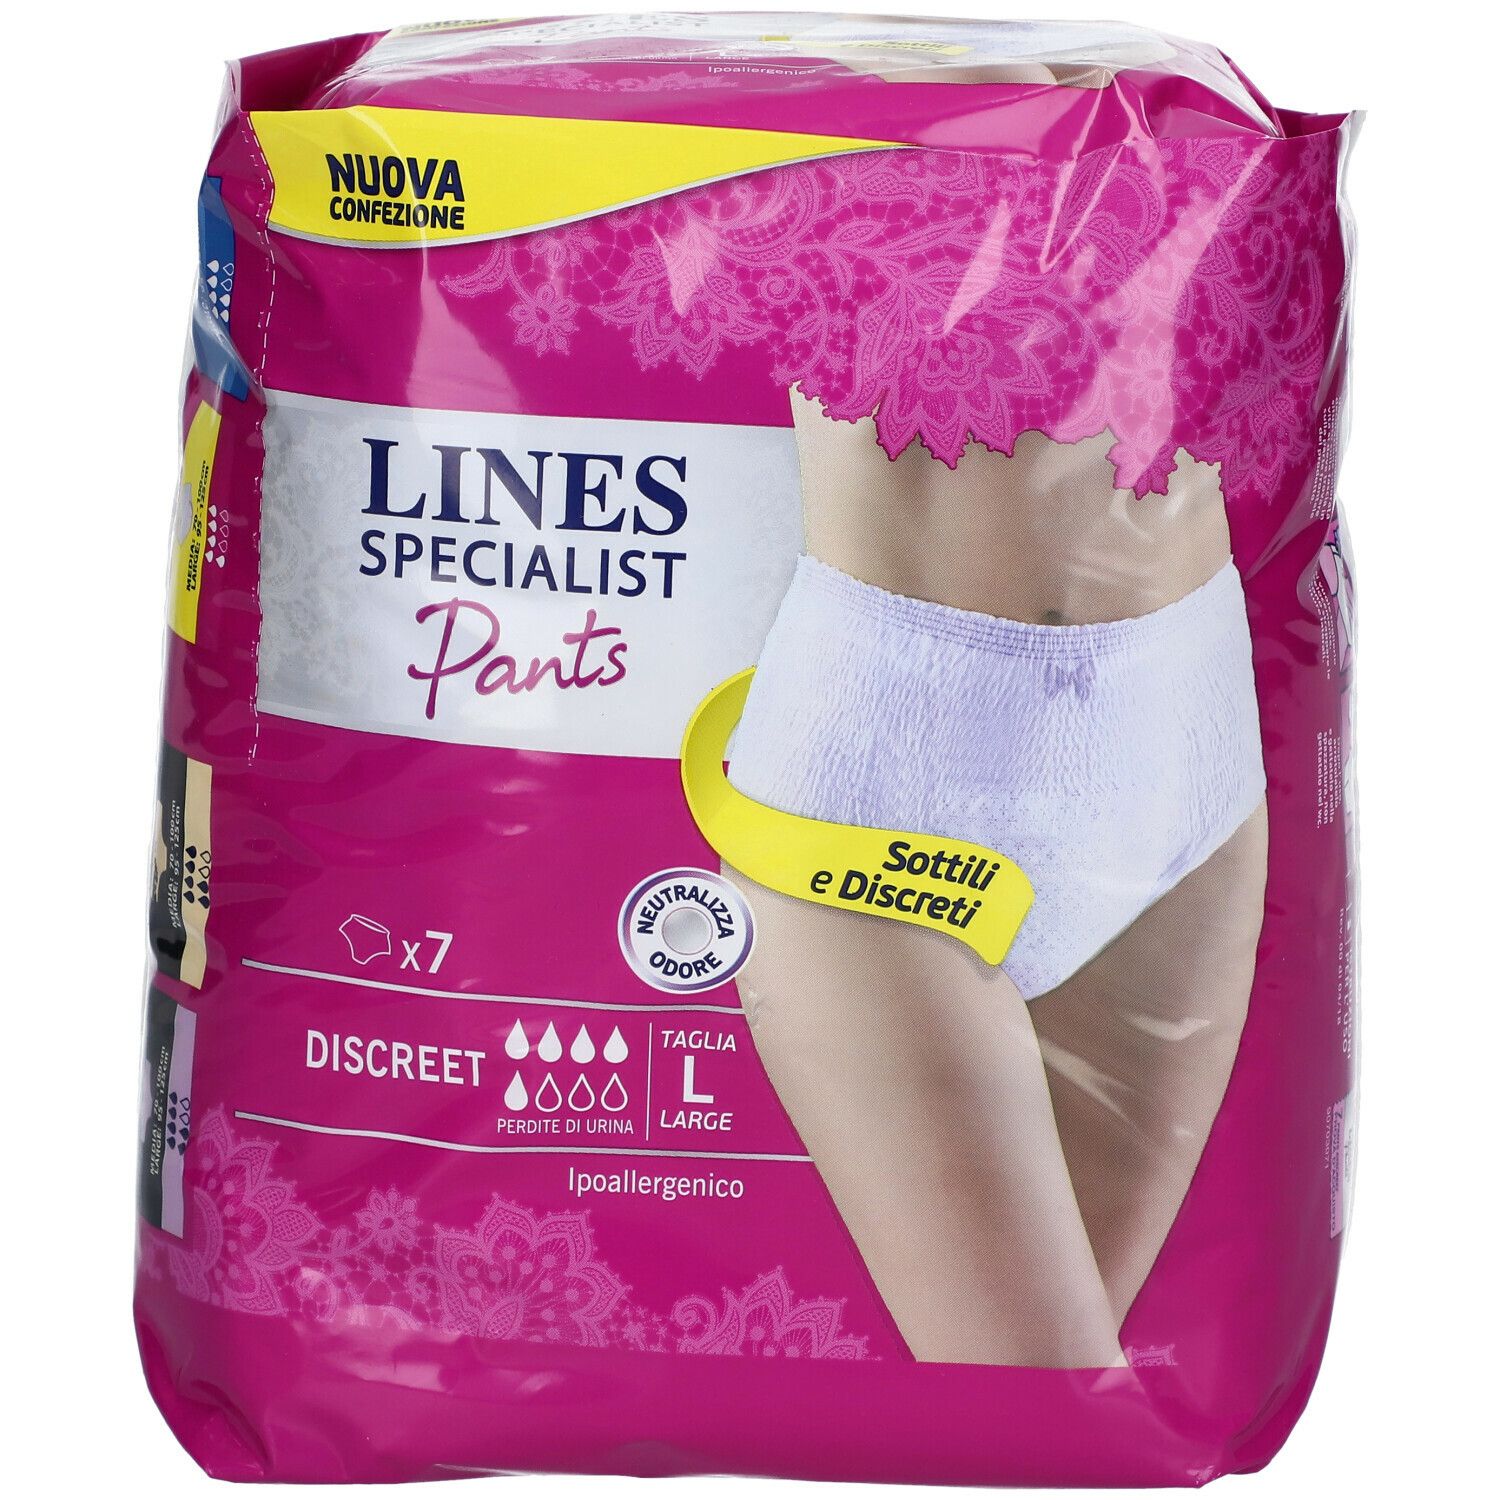 Lines Specialist Pants Descreet L